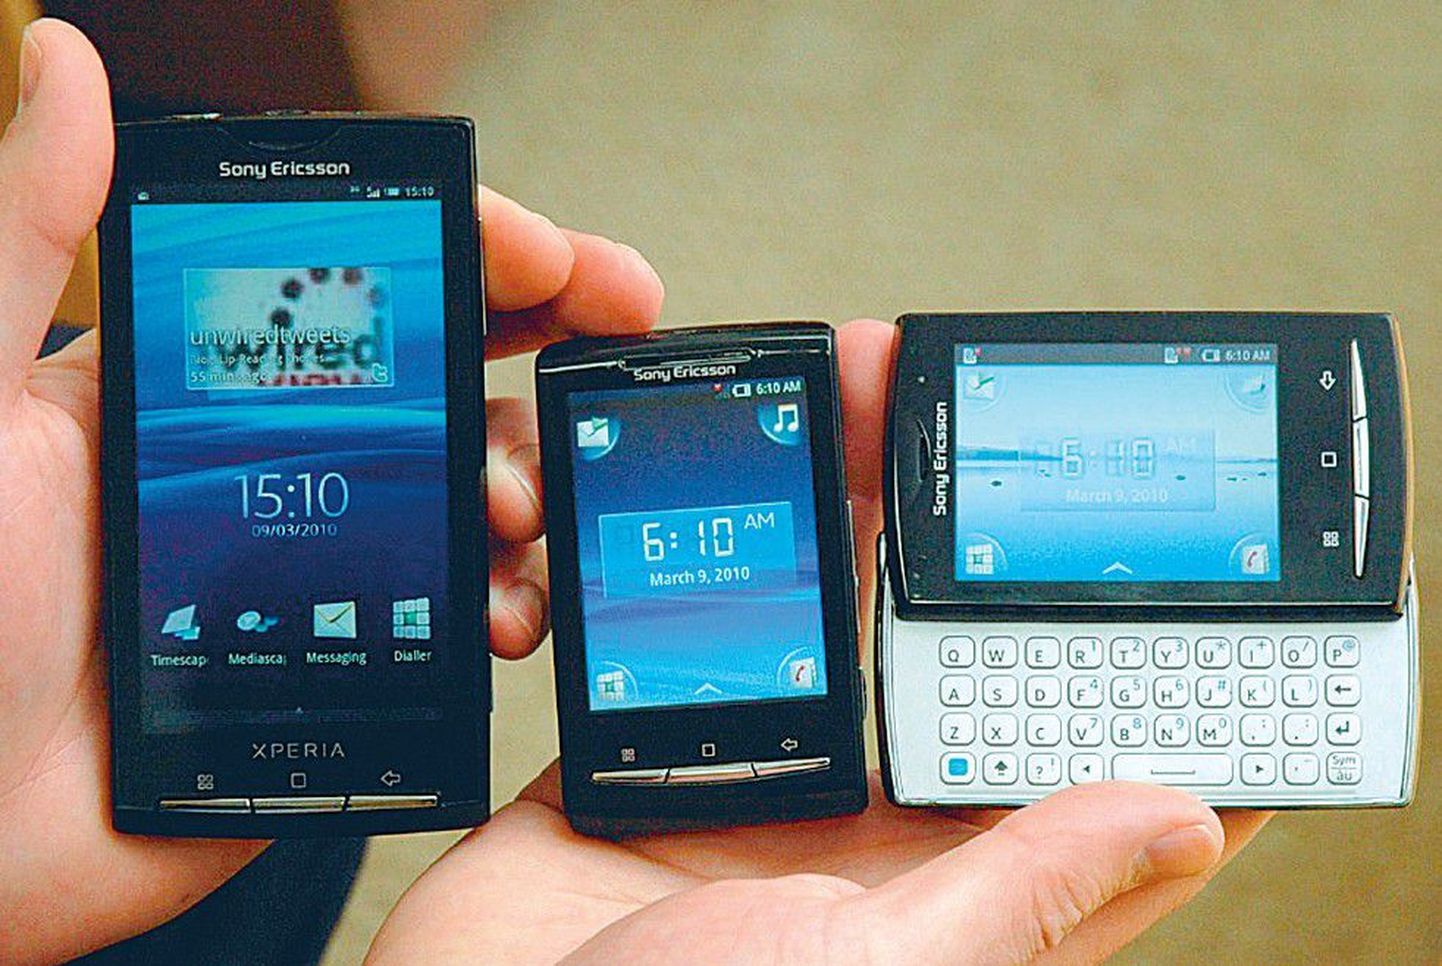 Xperia, Xperia Mini ja Xperia Mini Pro – Sony Ericssoni nutitelefonid pikkuse järjekorras.